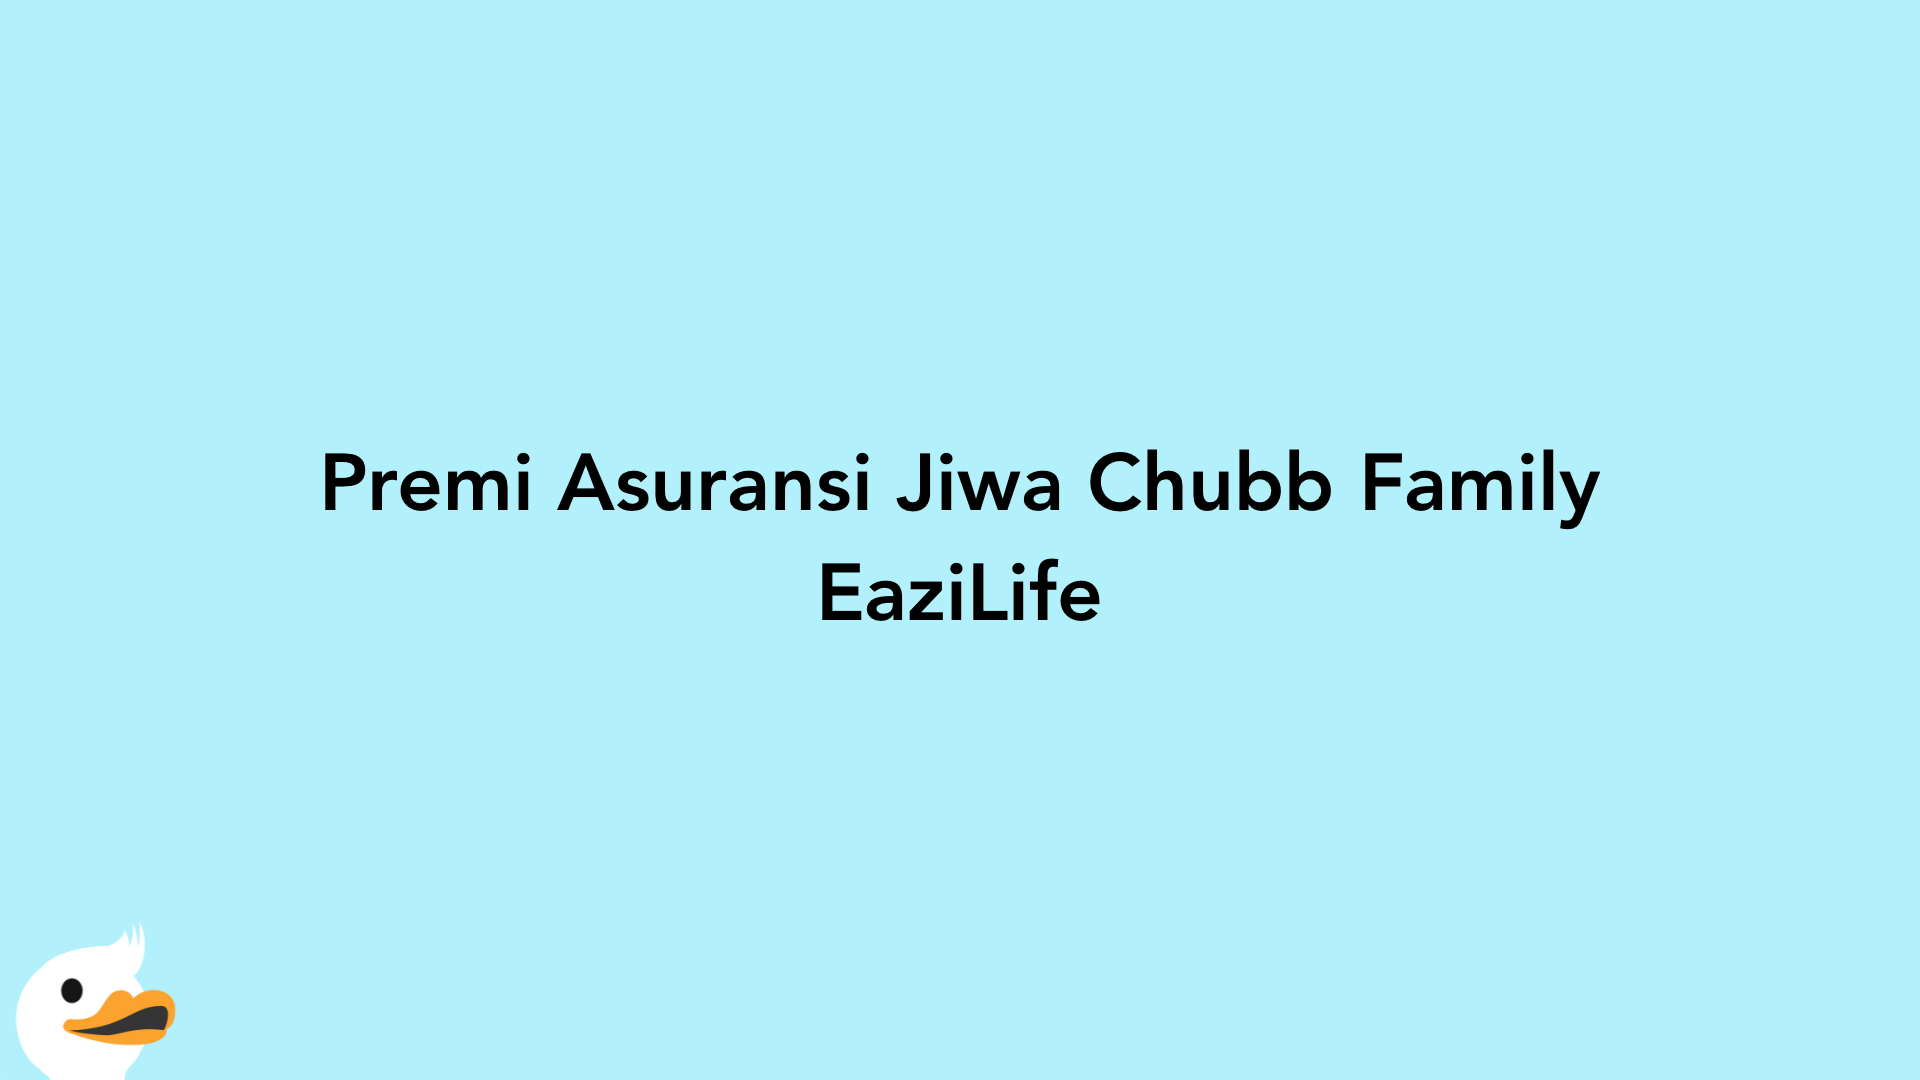 Premi Asuransi Jiwa Chubb Family EaziLife